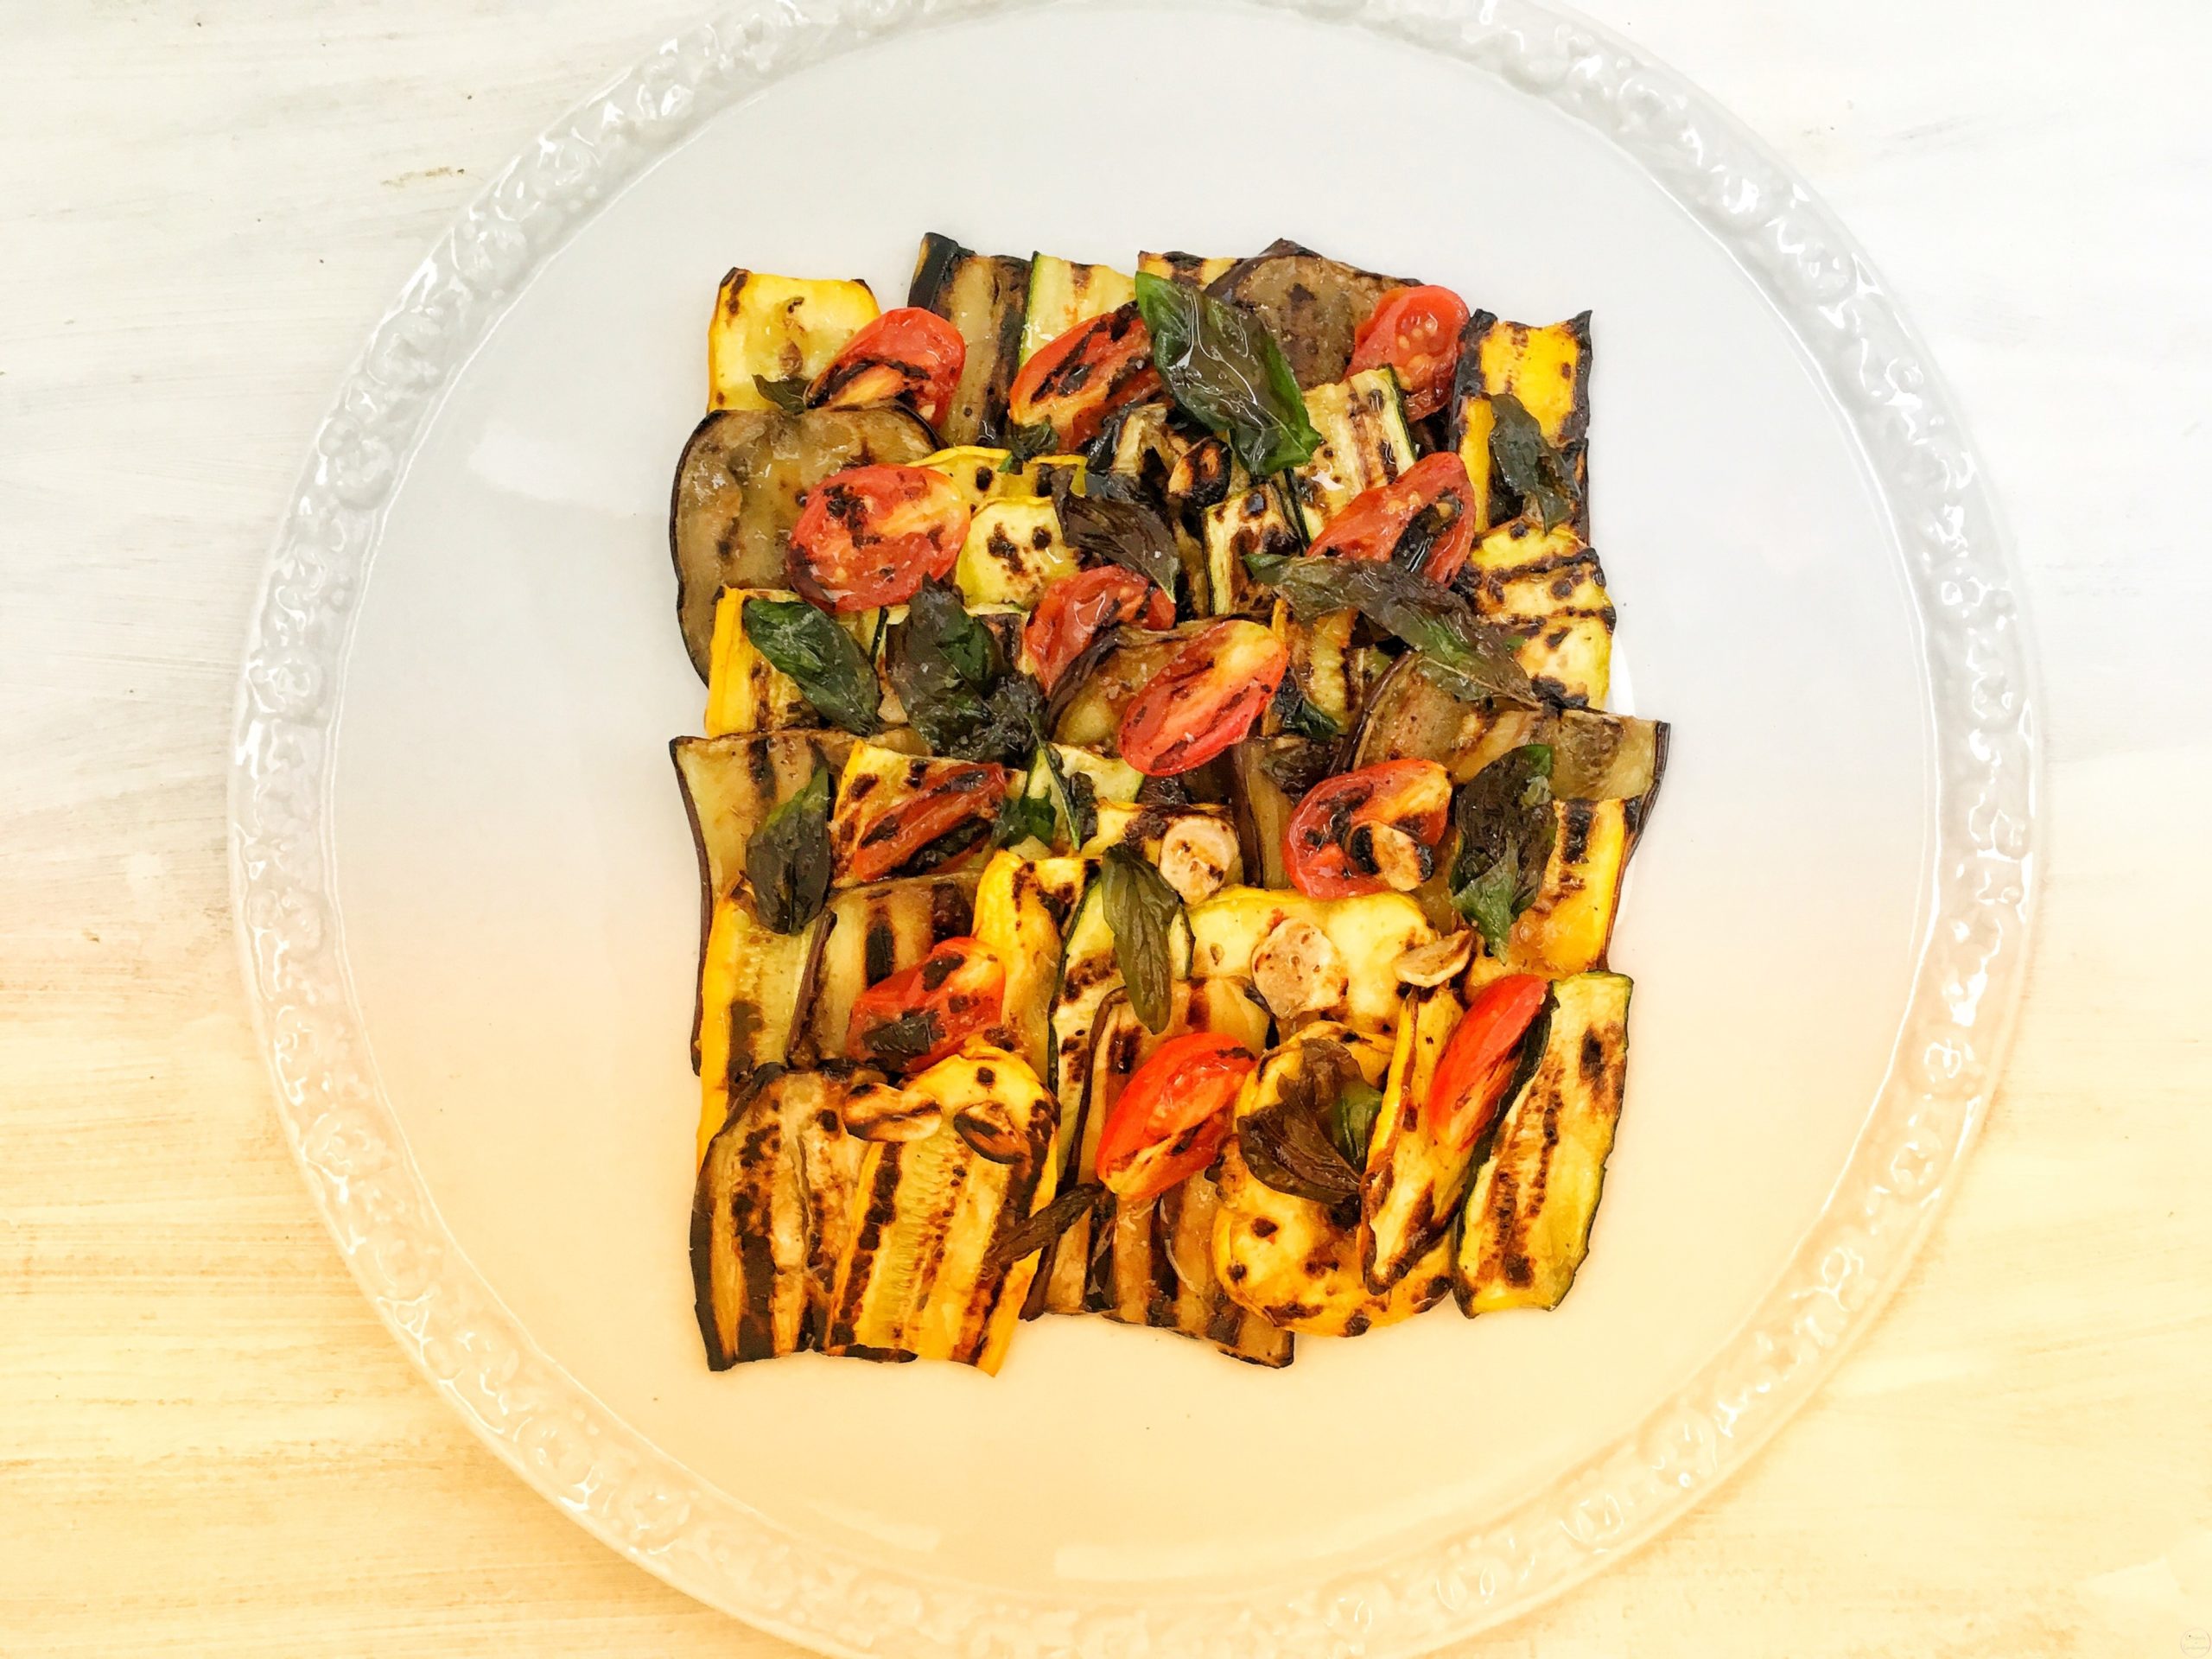 Healthy recipe - grilled summer veggies - a delish